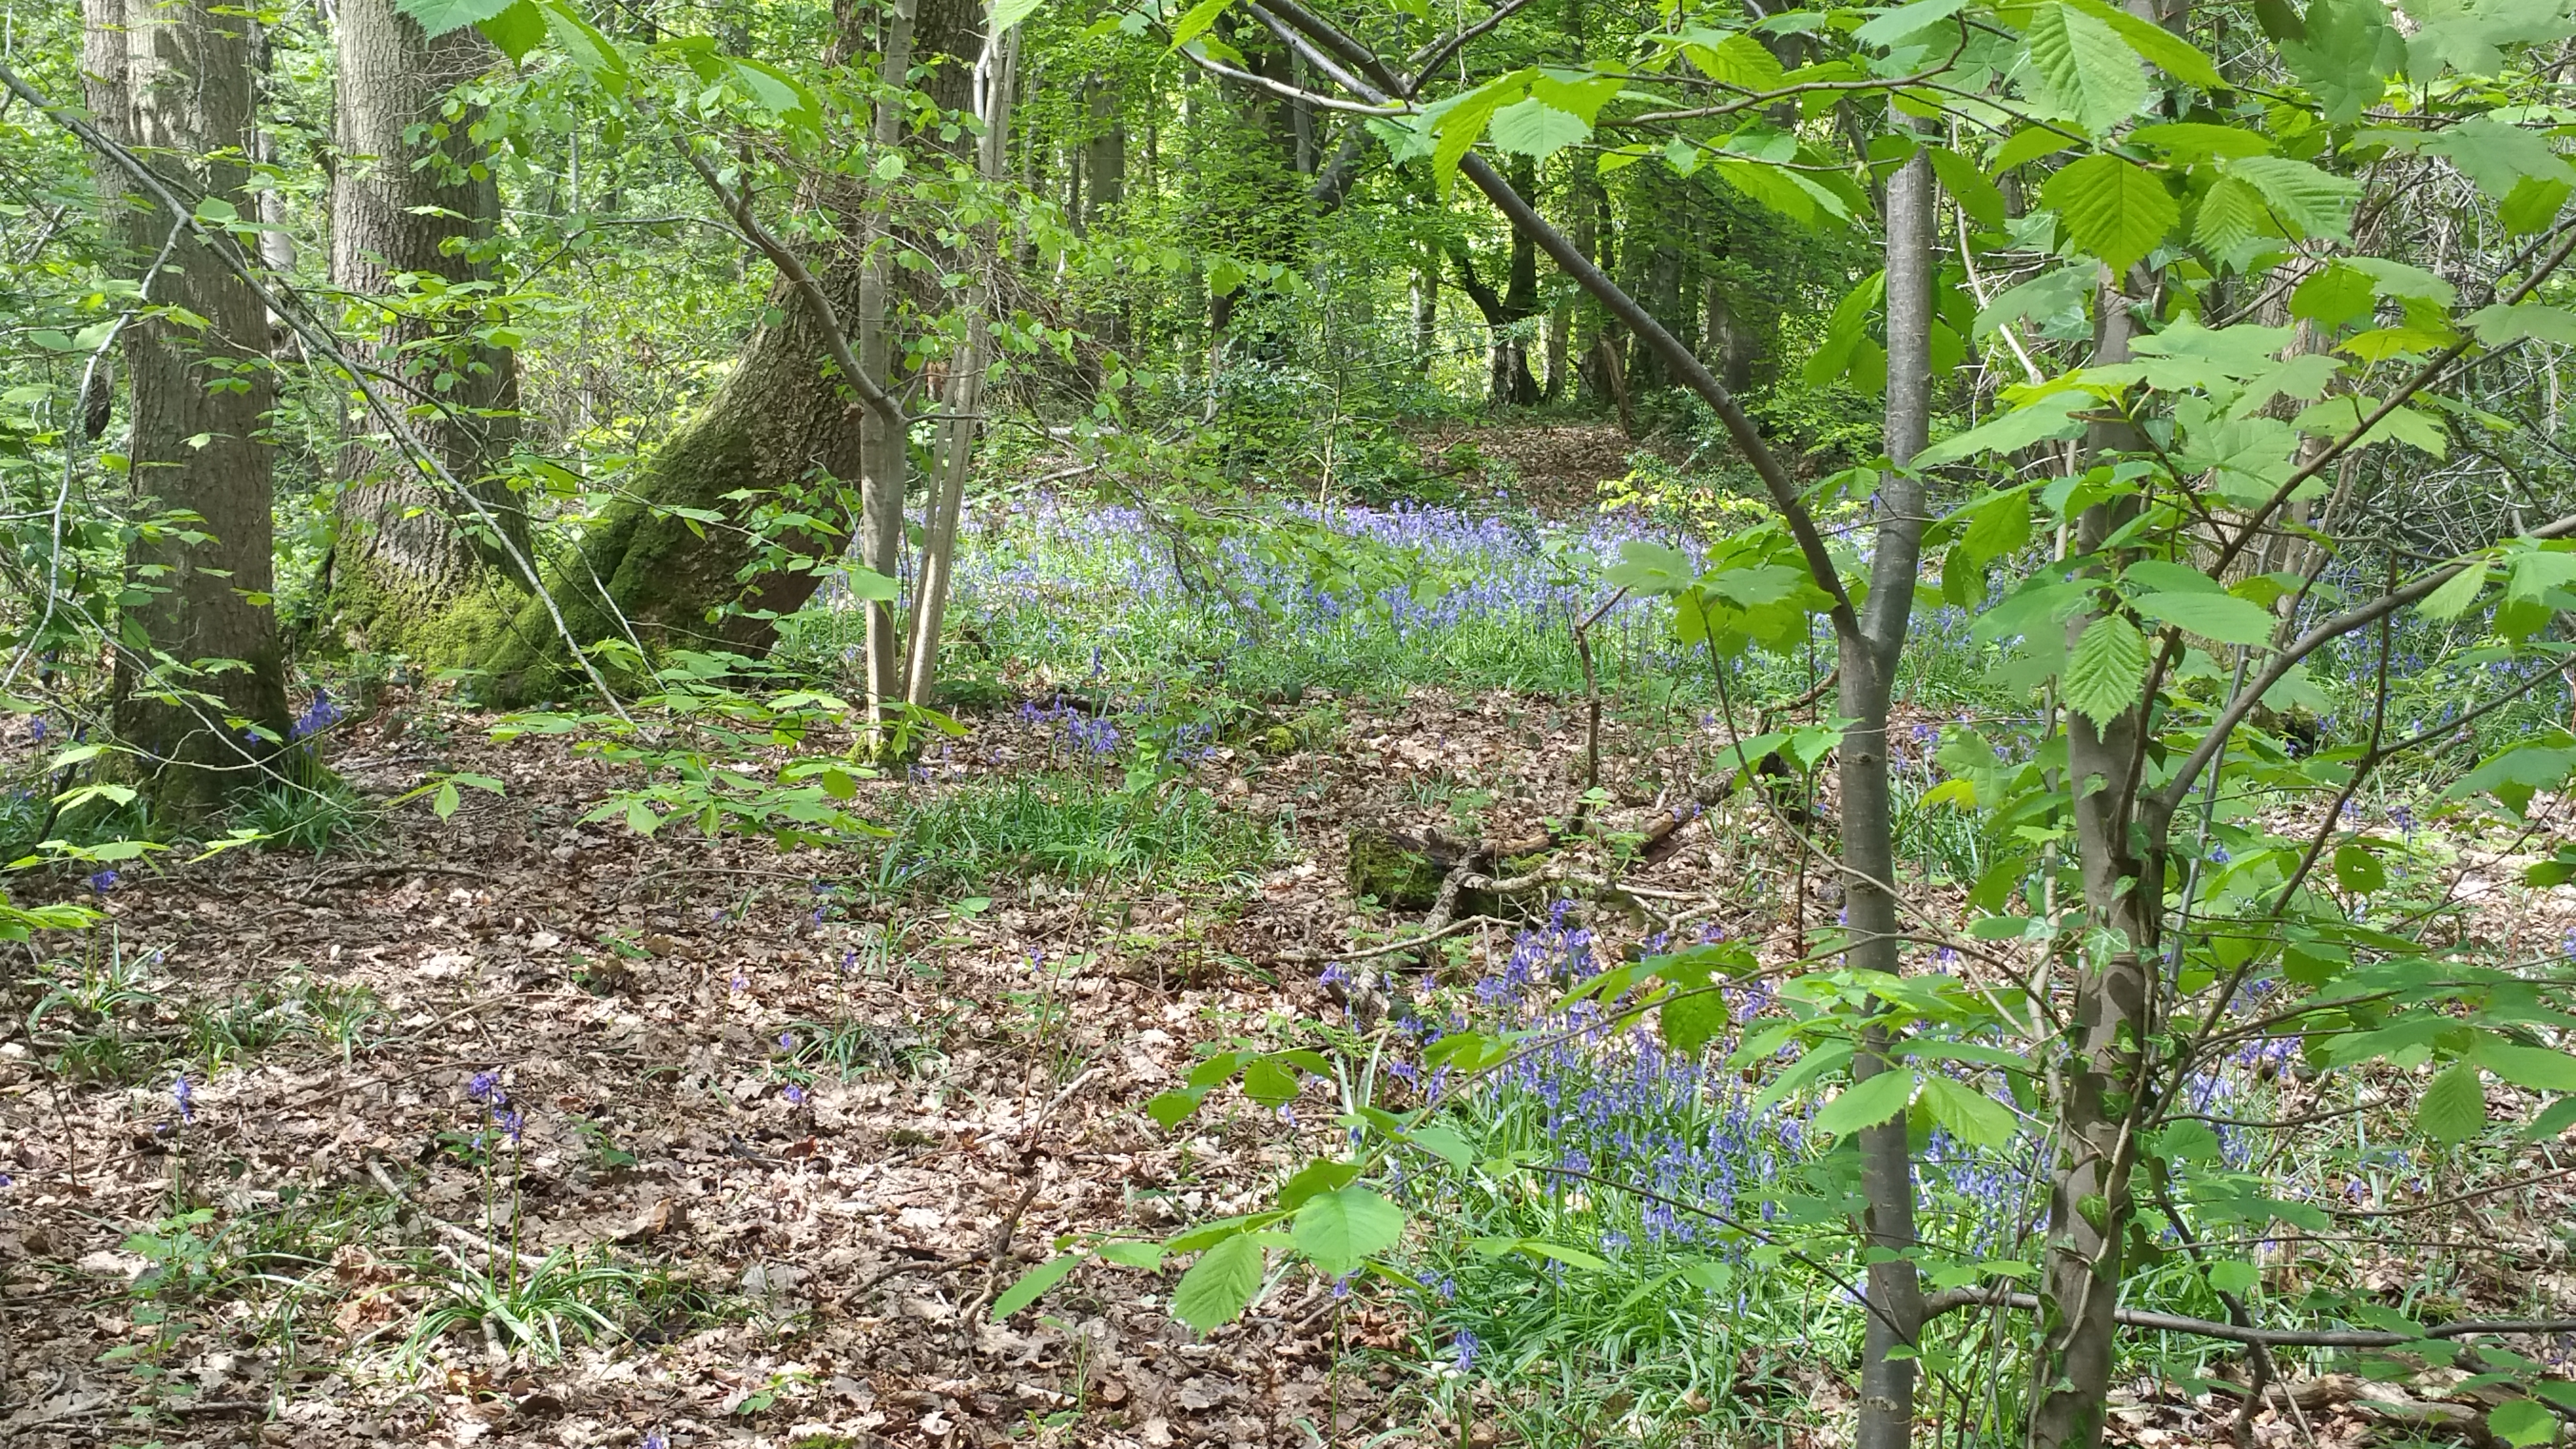 Some binaural woodland ambience